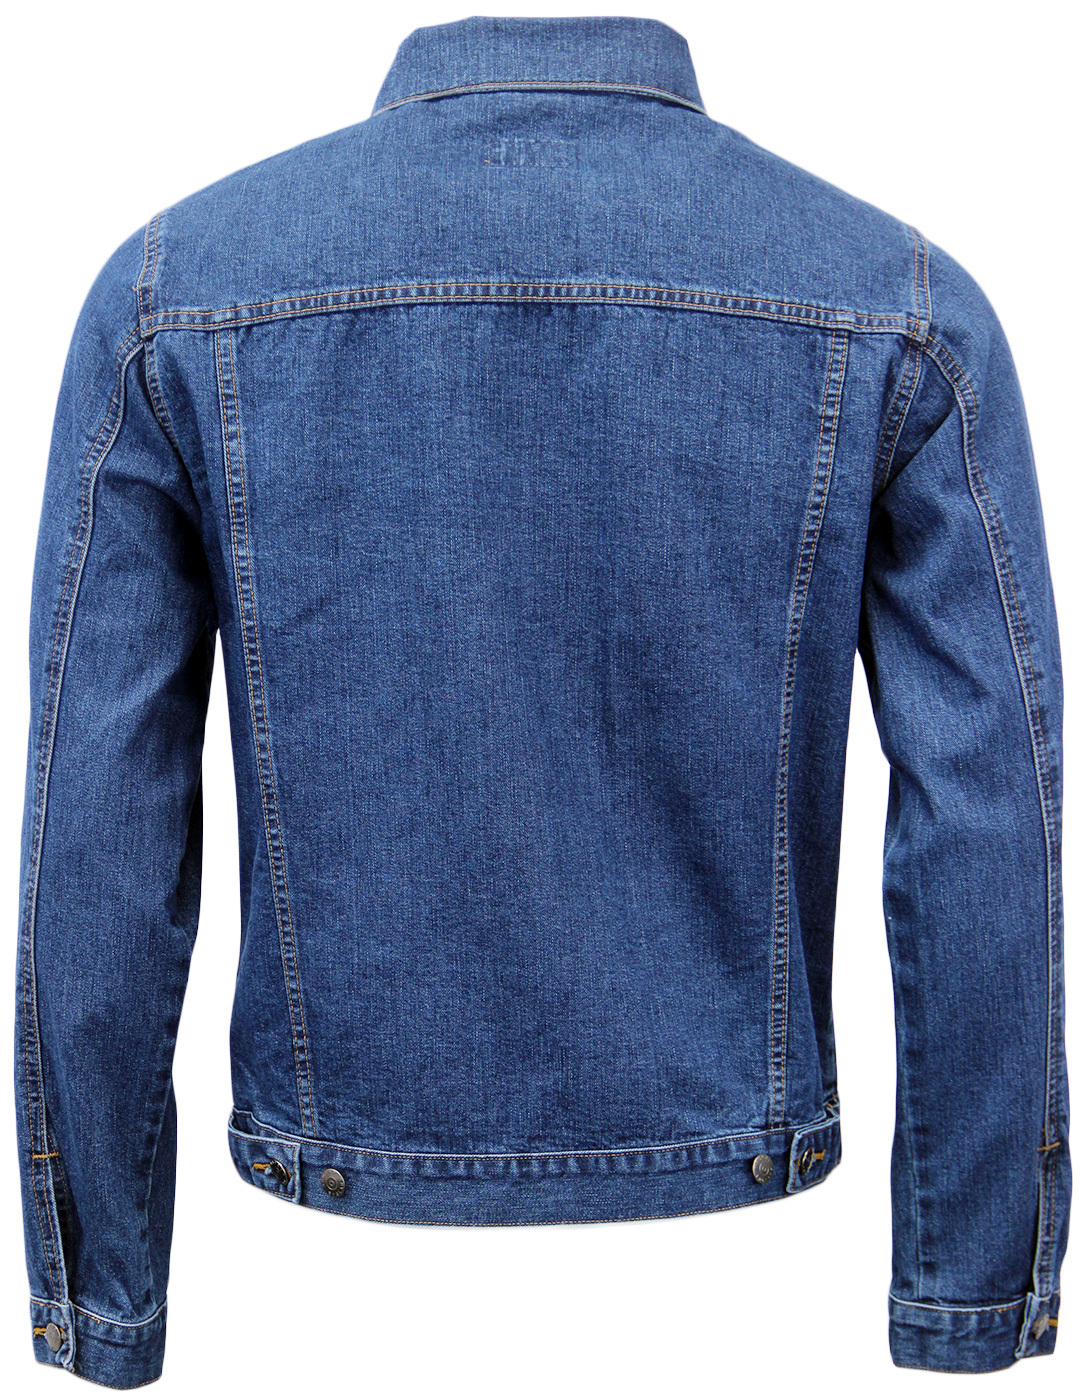 MADCAP ENGLAND Retro 60s Mod Denim Western Jacket Blue